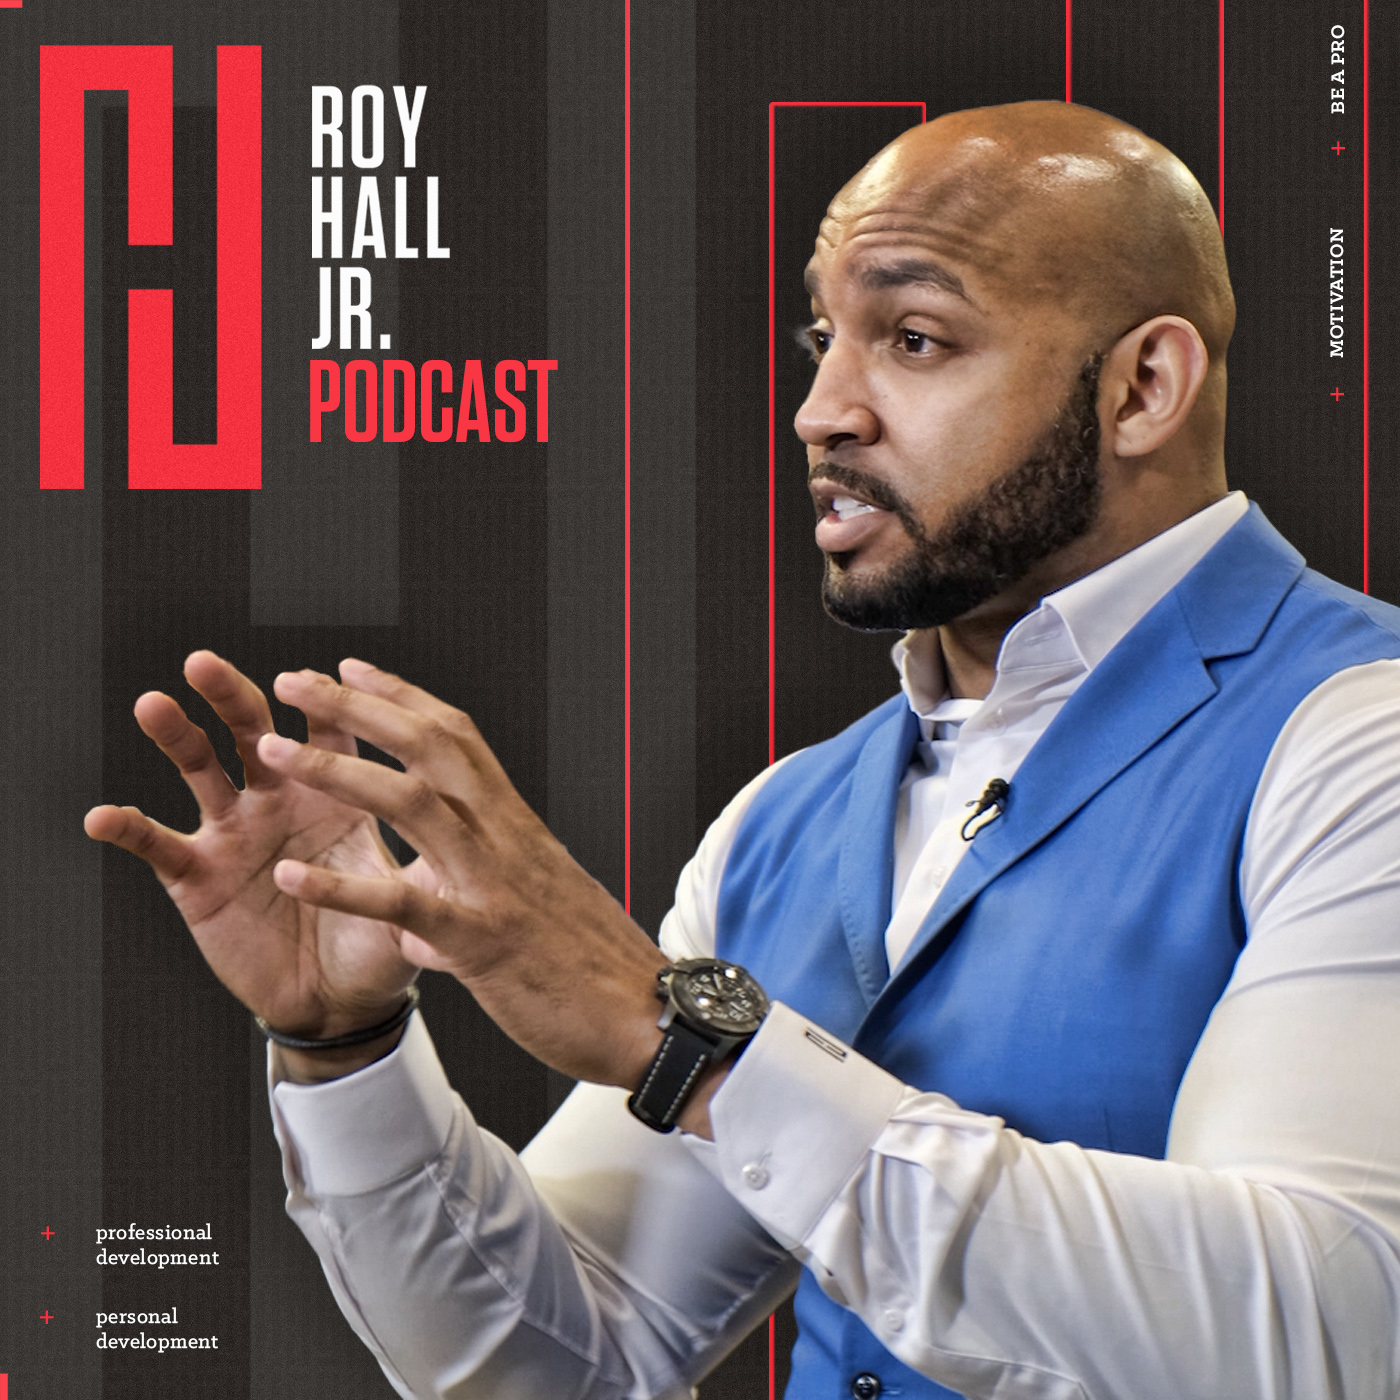 The Roy Hall Jr. Podcast